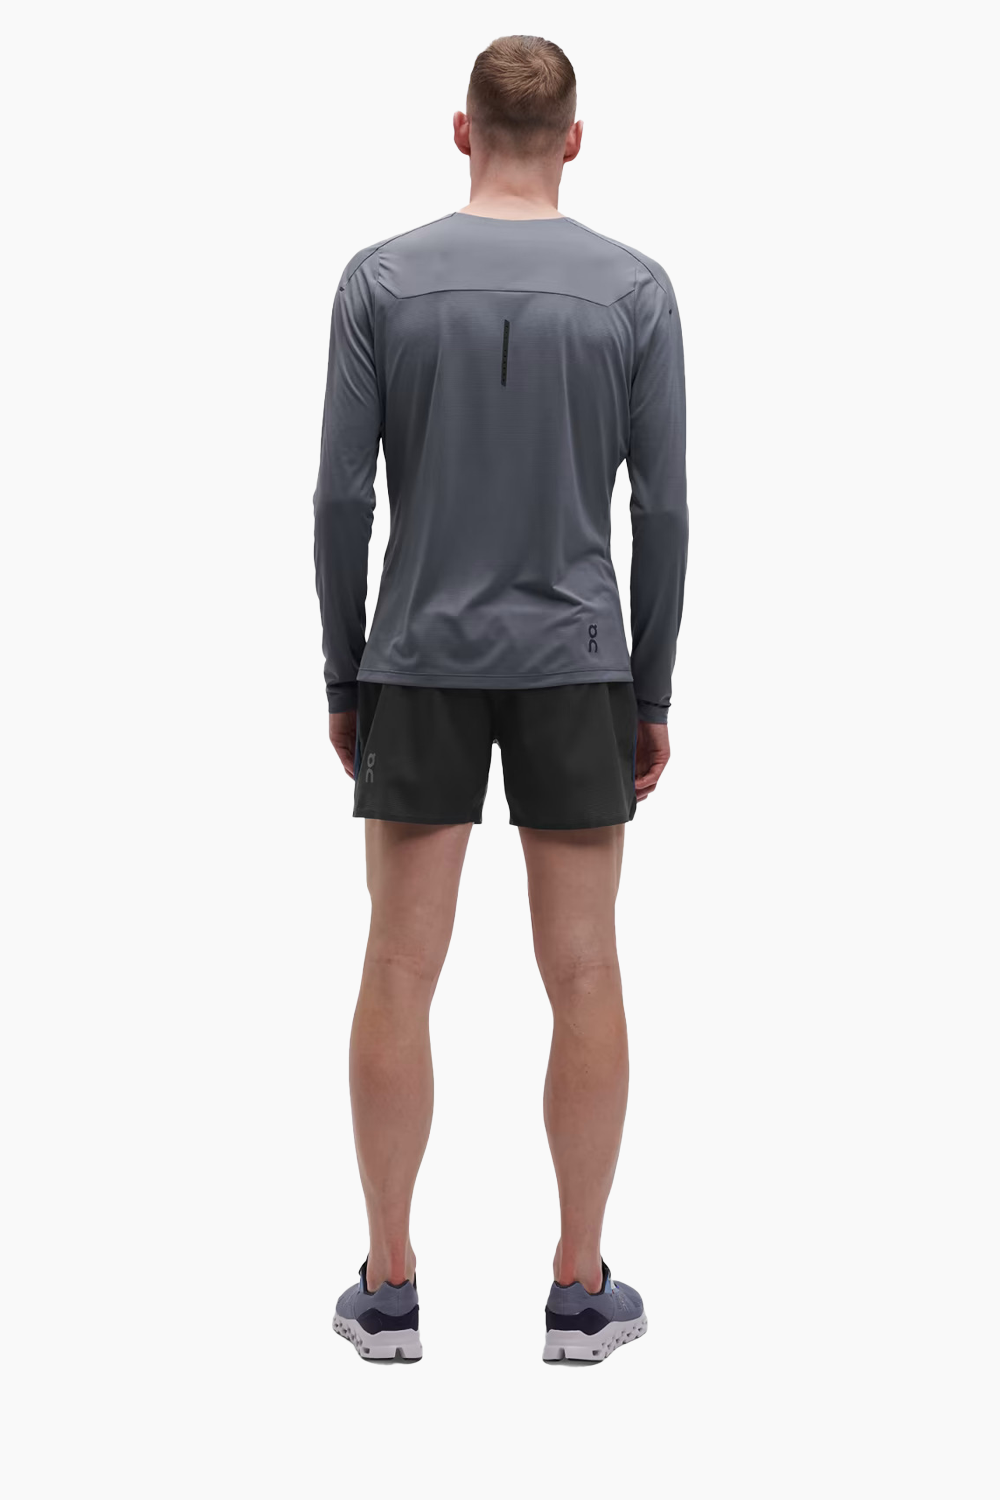 ON | Men's 5" Lightweight Shorts in Denim/Black